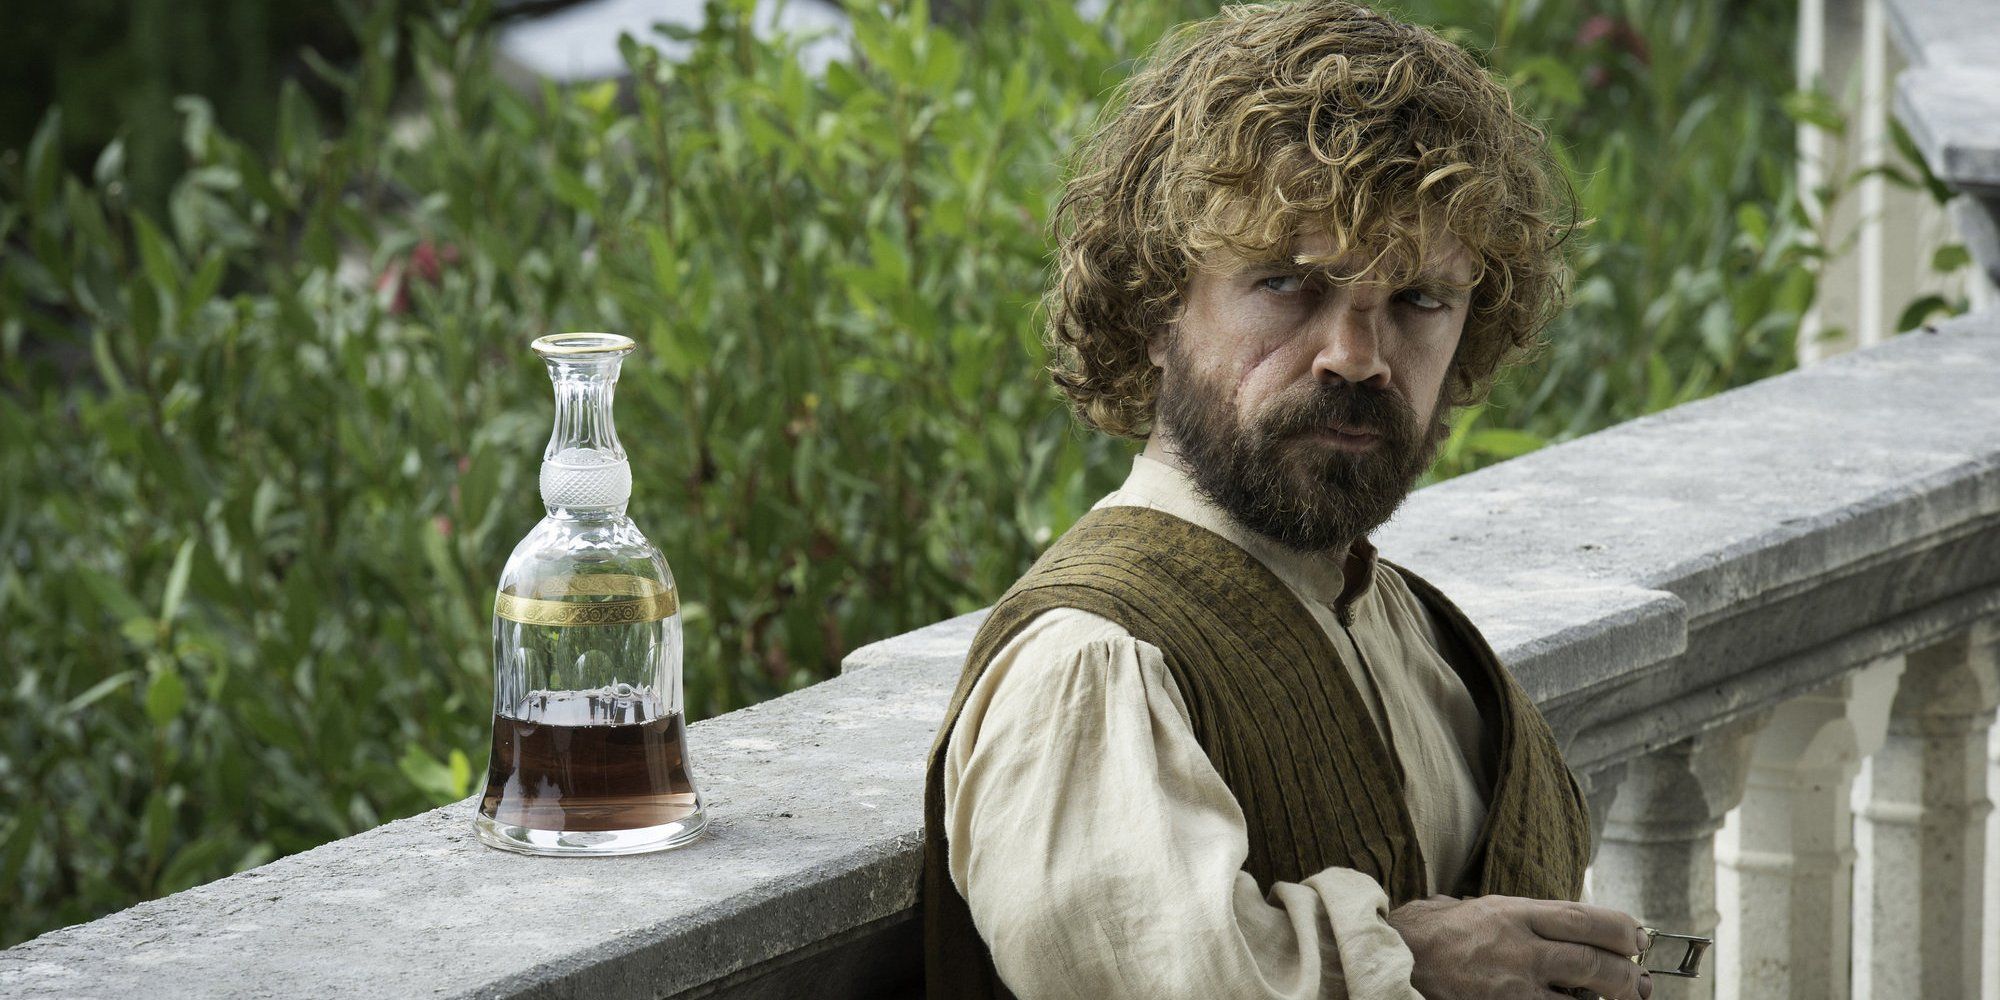 Tyrion drinking wine.